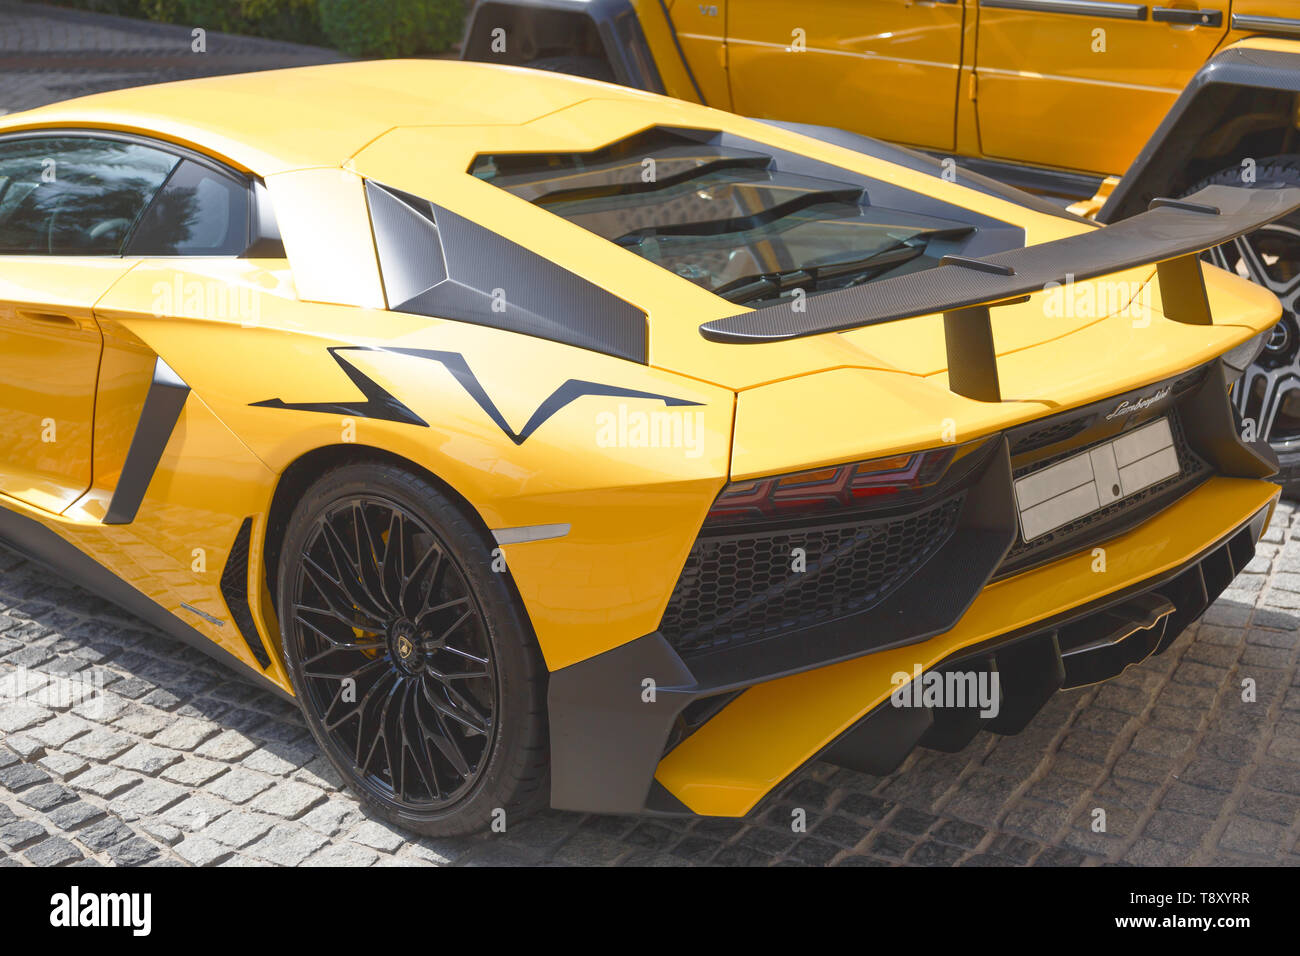 DUBAI, UAE - JANUARY 08, 2019: yellow luxury supercar Lamborghini Aventador Roadster in Dubai Stock Photo